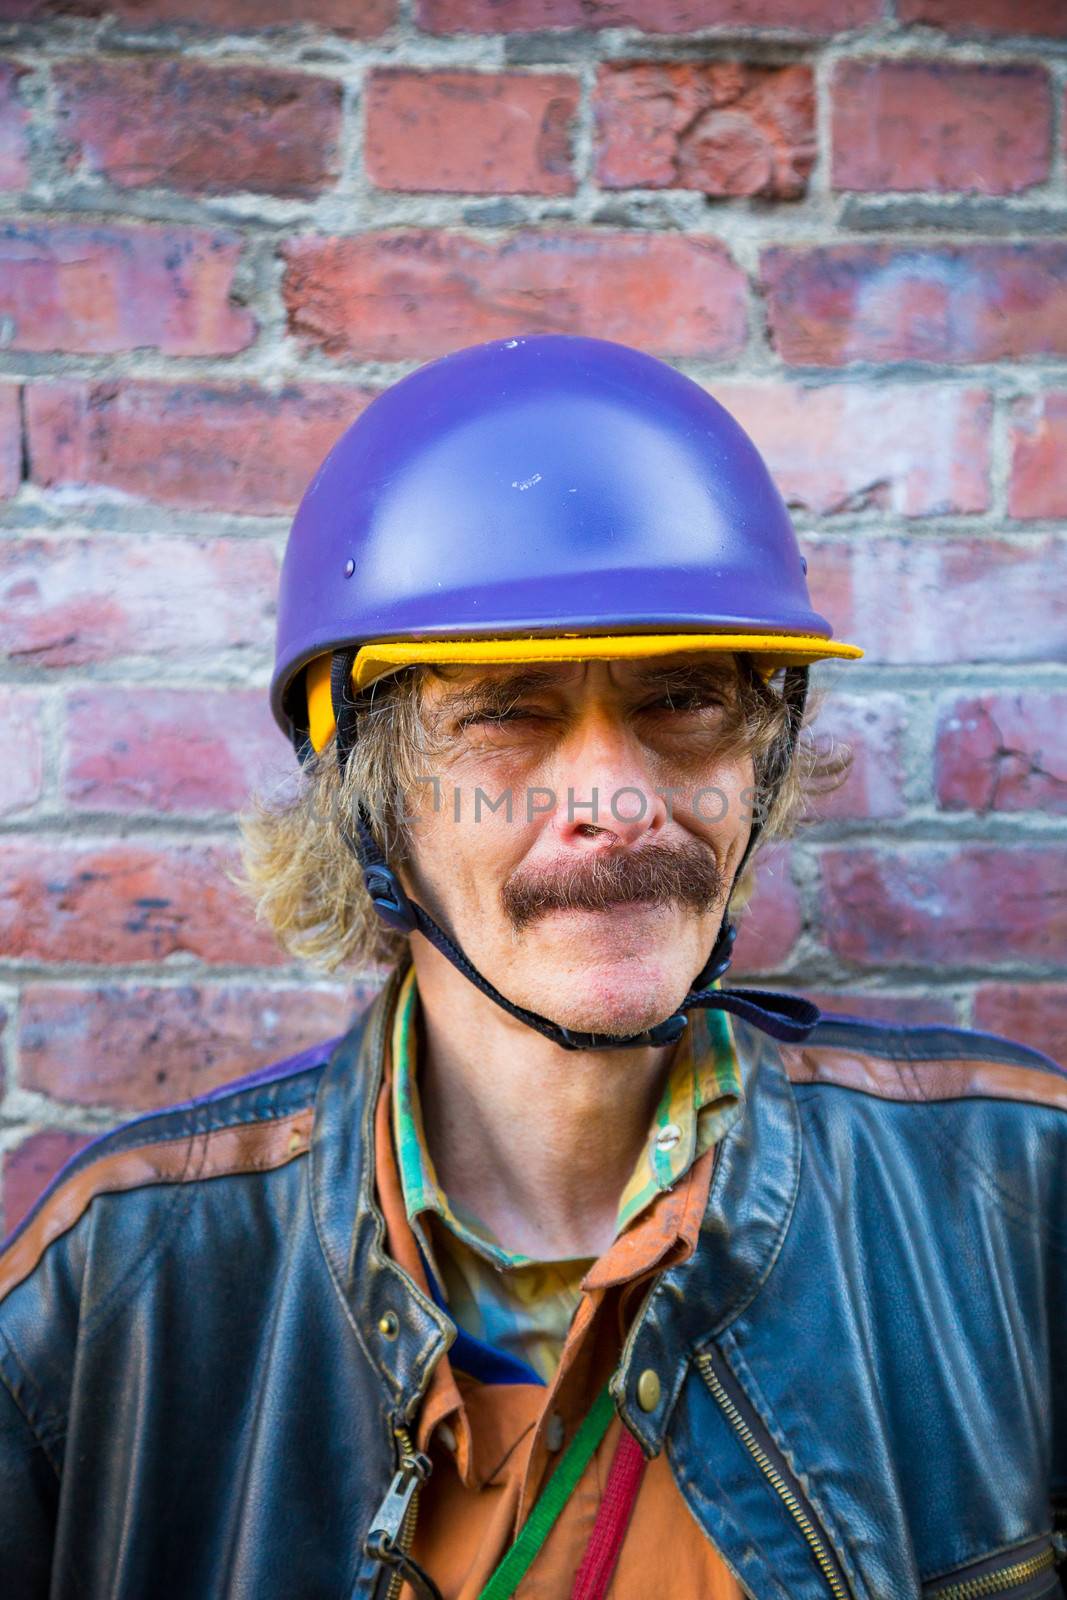 Man in Helmet by joshuaraineyphotography